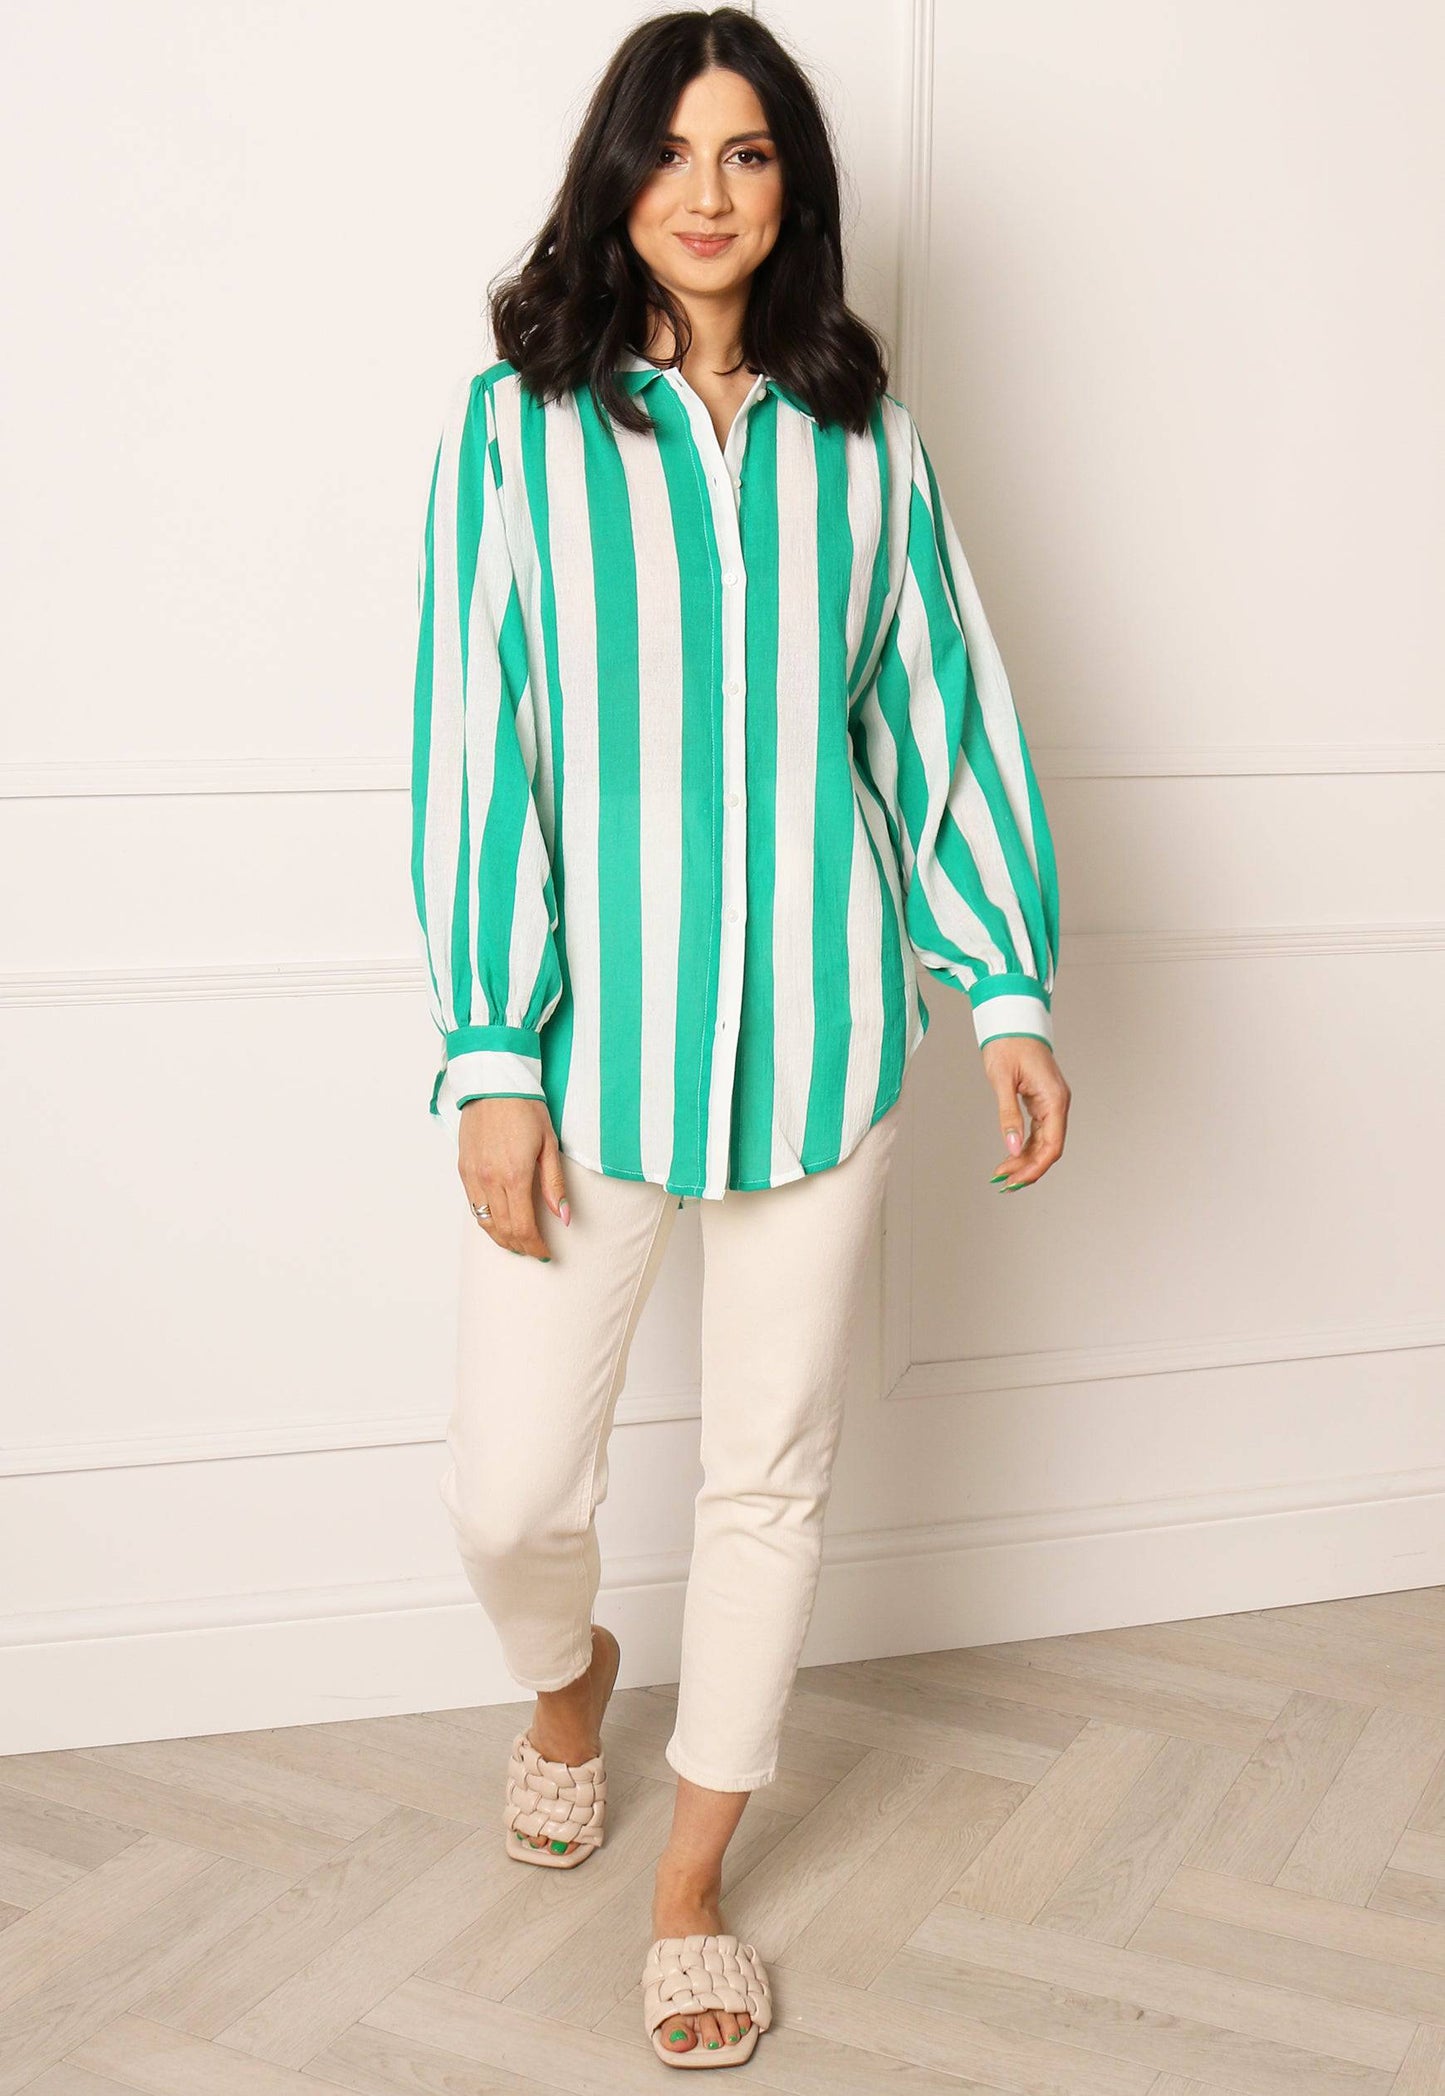 VILA Stripe Lightweight Oversized Cotton Shirt in Green & White - One Nation Clothing